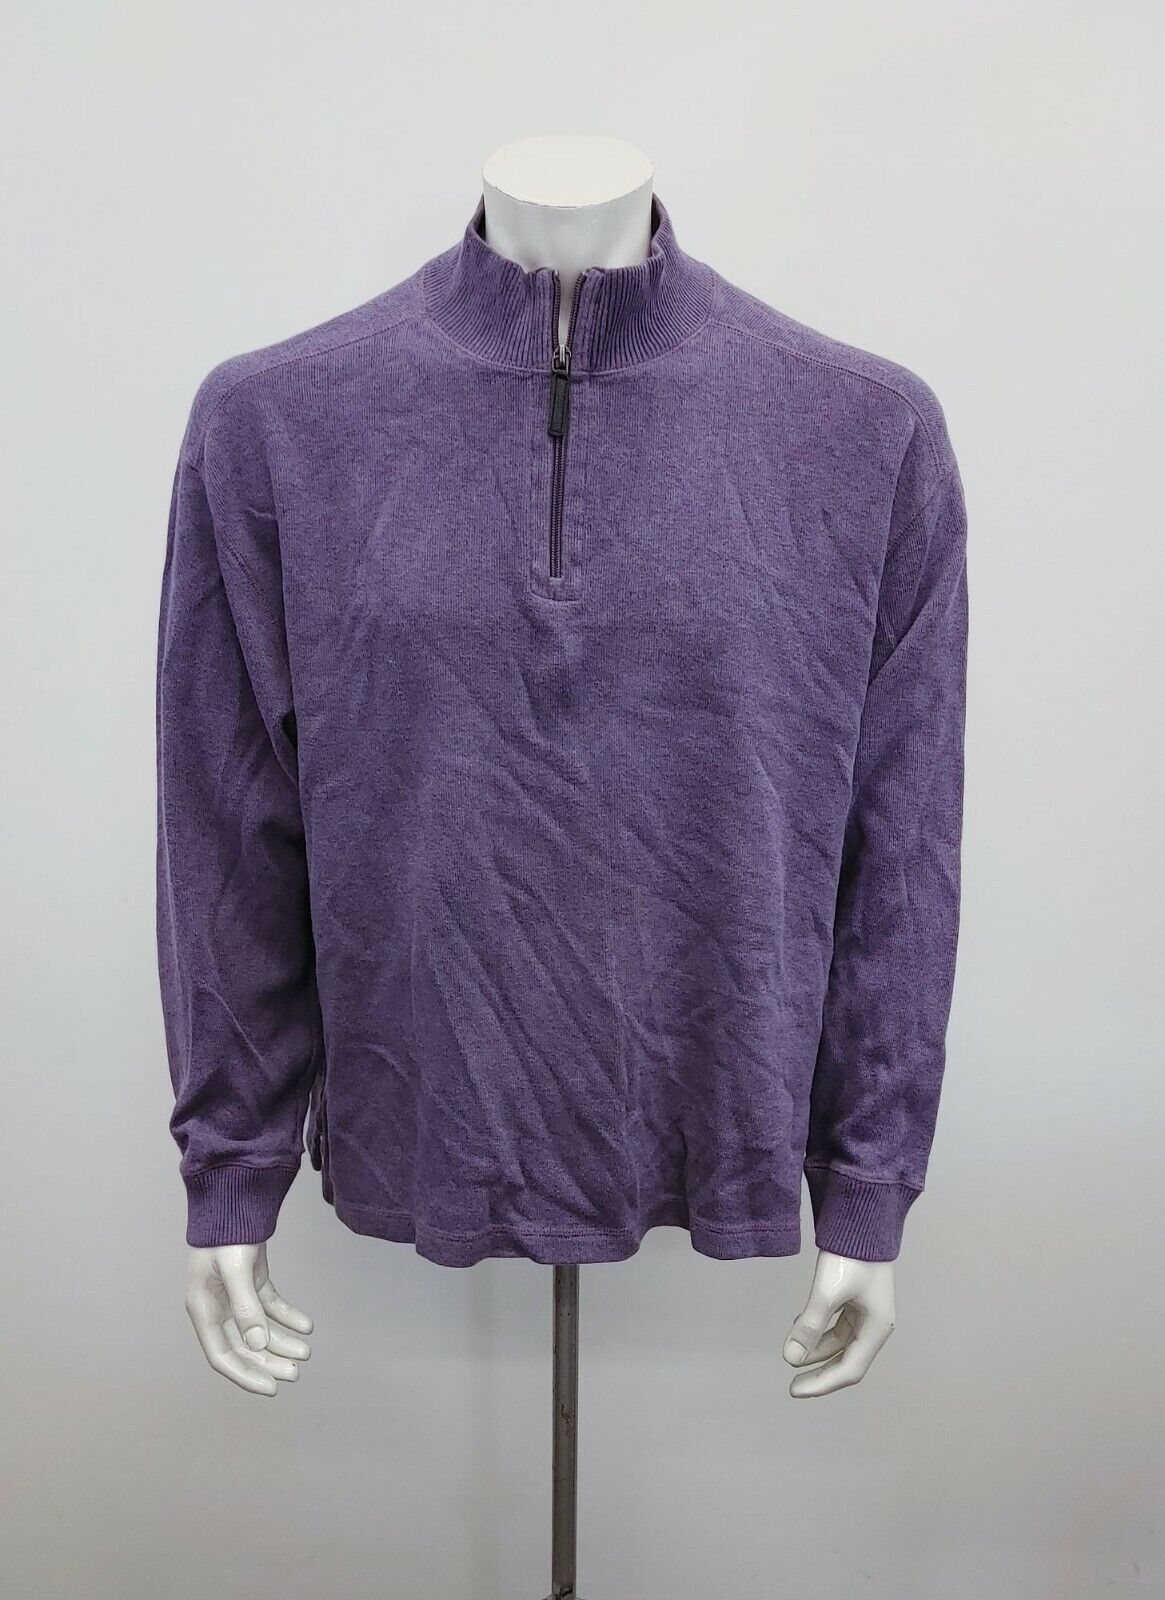 Primary image for PSA Bank Men's 1/4 Zip Up Sweatshirt Size XL Purple Long Sleeve Cotton